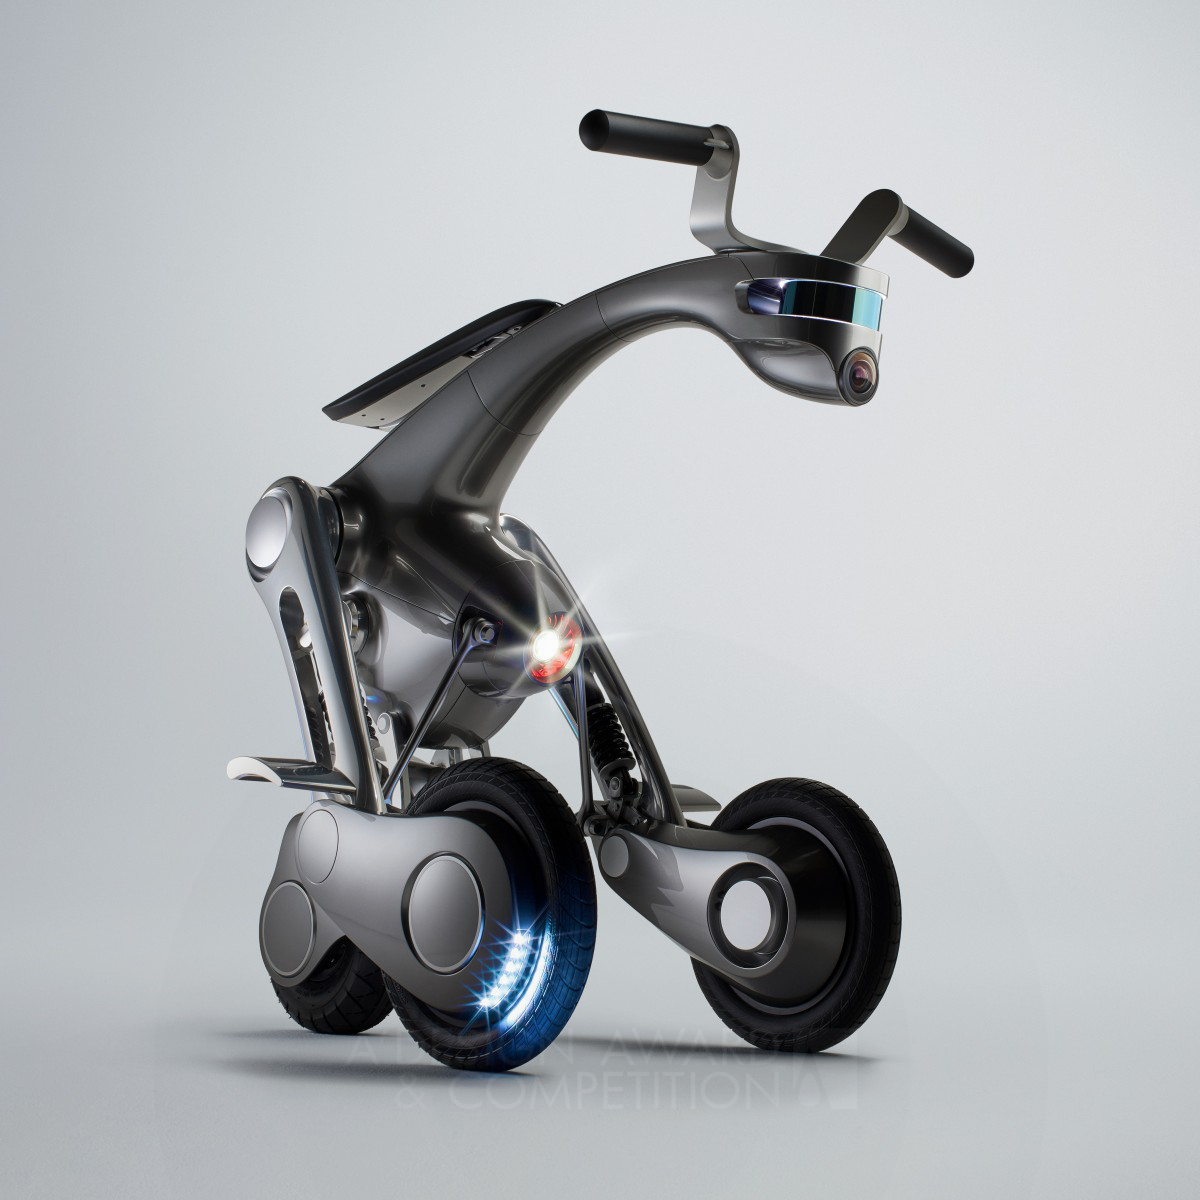 CanguRo Mobility Robot by Shunji Yamanaka - fuRo Platinum Vehicle, Mobility and Transportation Design Award Winner 2021 